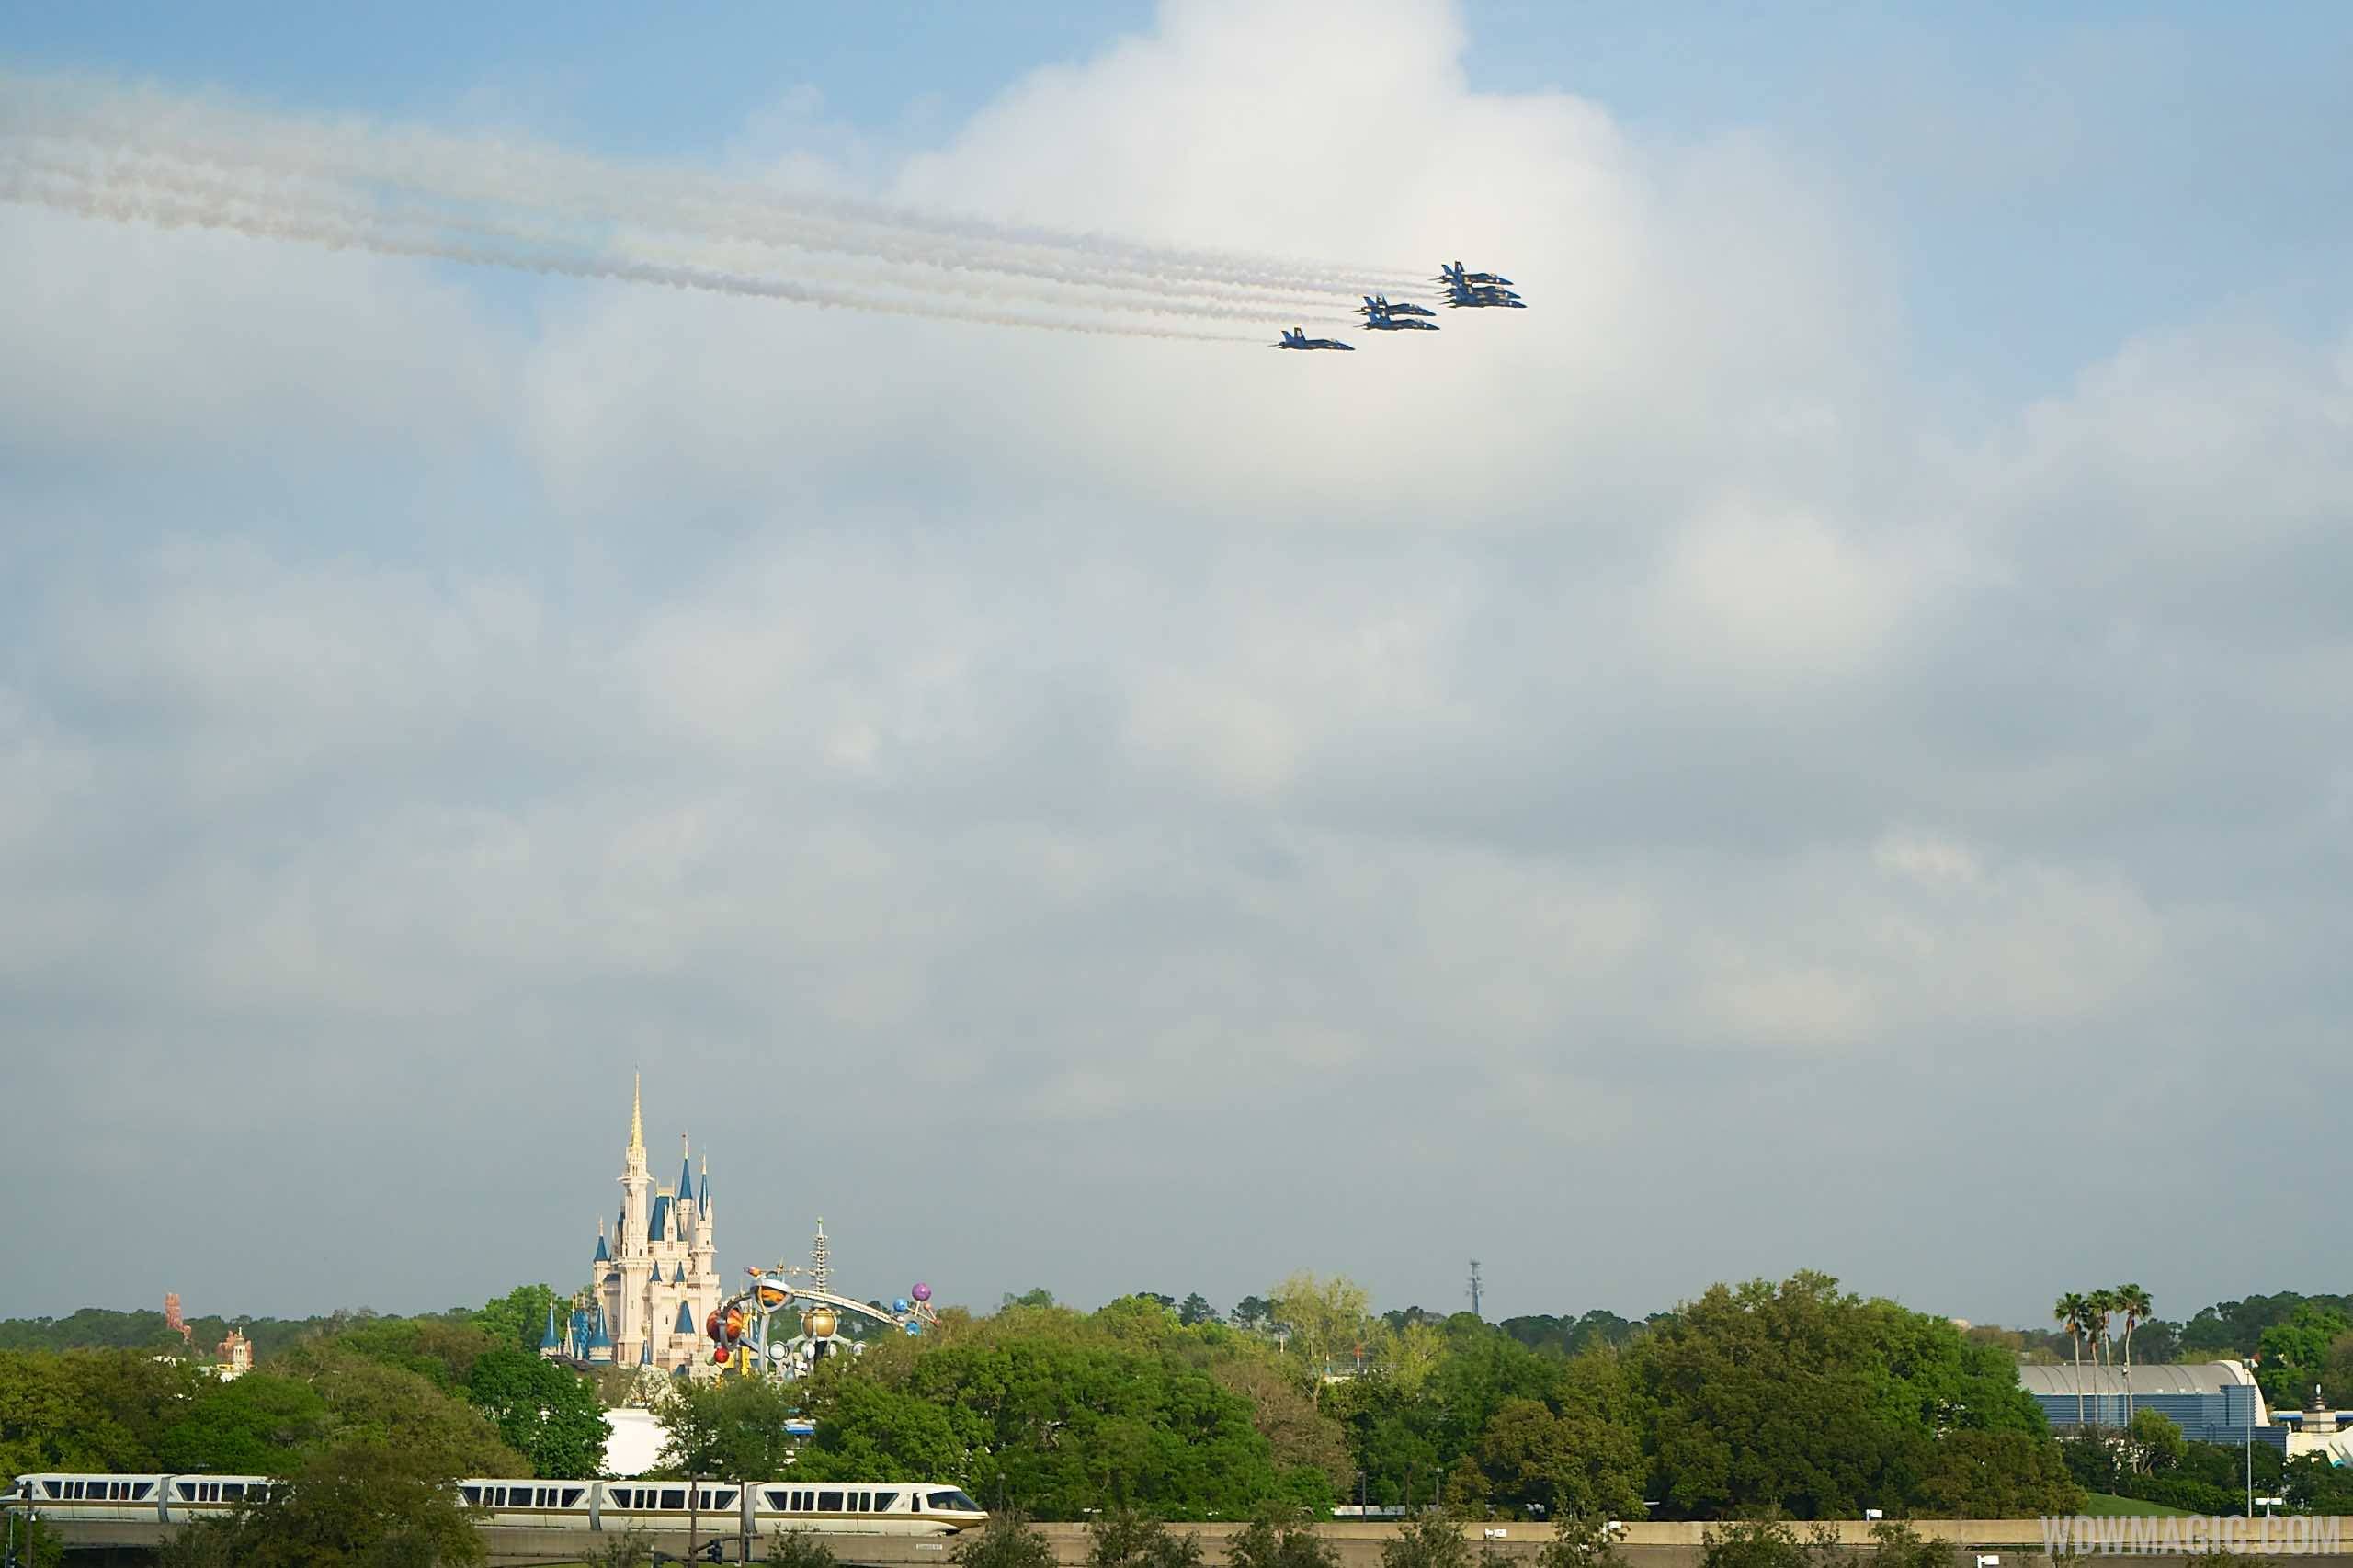 PHOTOS - U.S. Navy Blue Angels fly over the Magic Kingdom